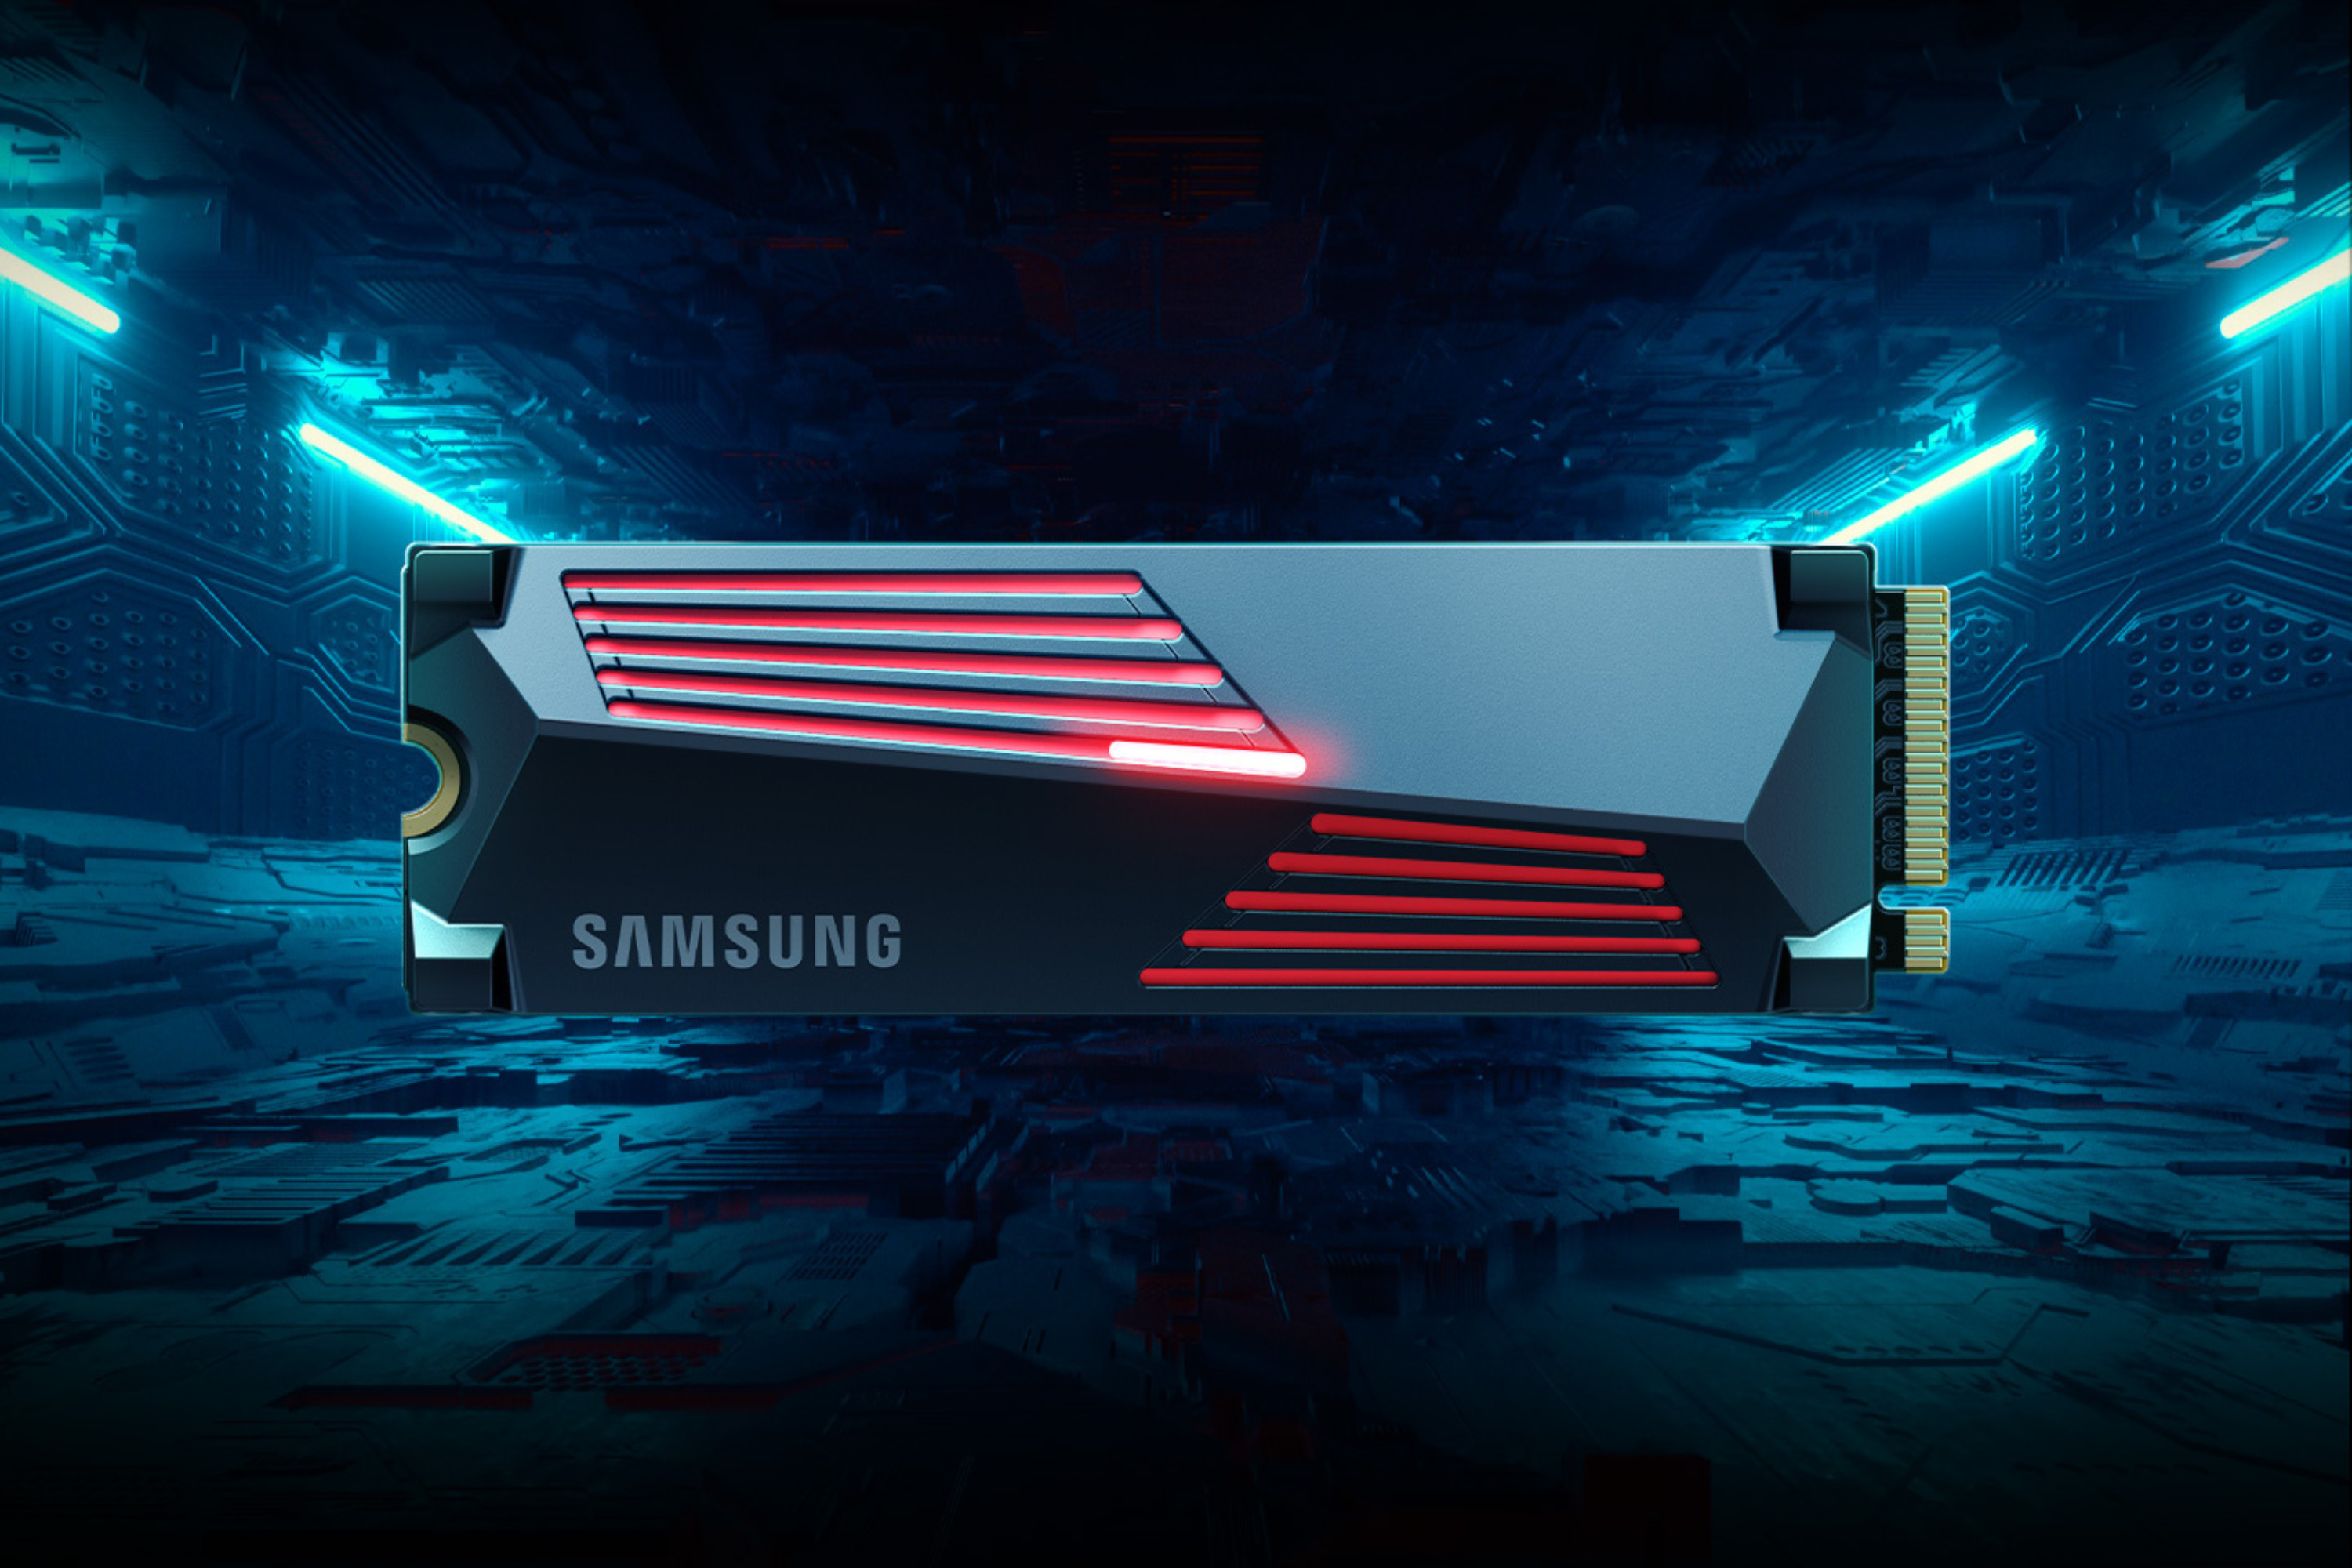 Samsung 990 Pro w/ Heatsink on techno background featuring illuminated blue bars 